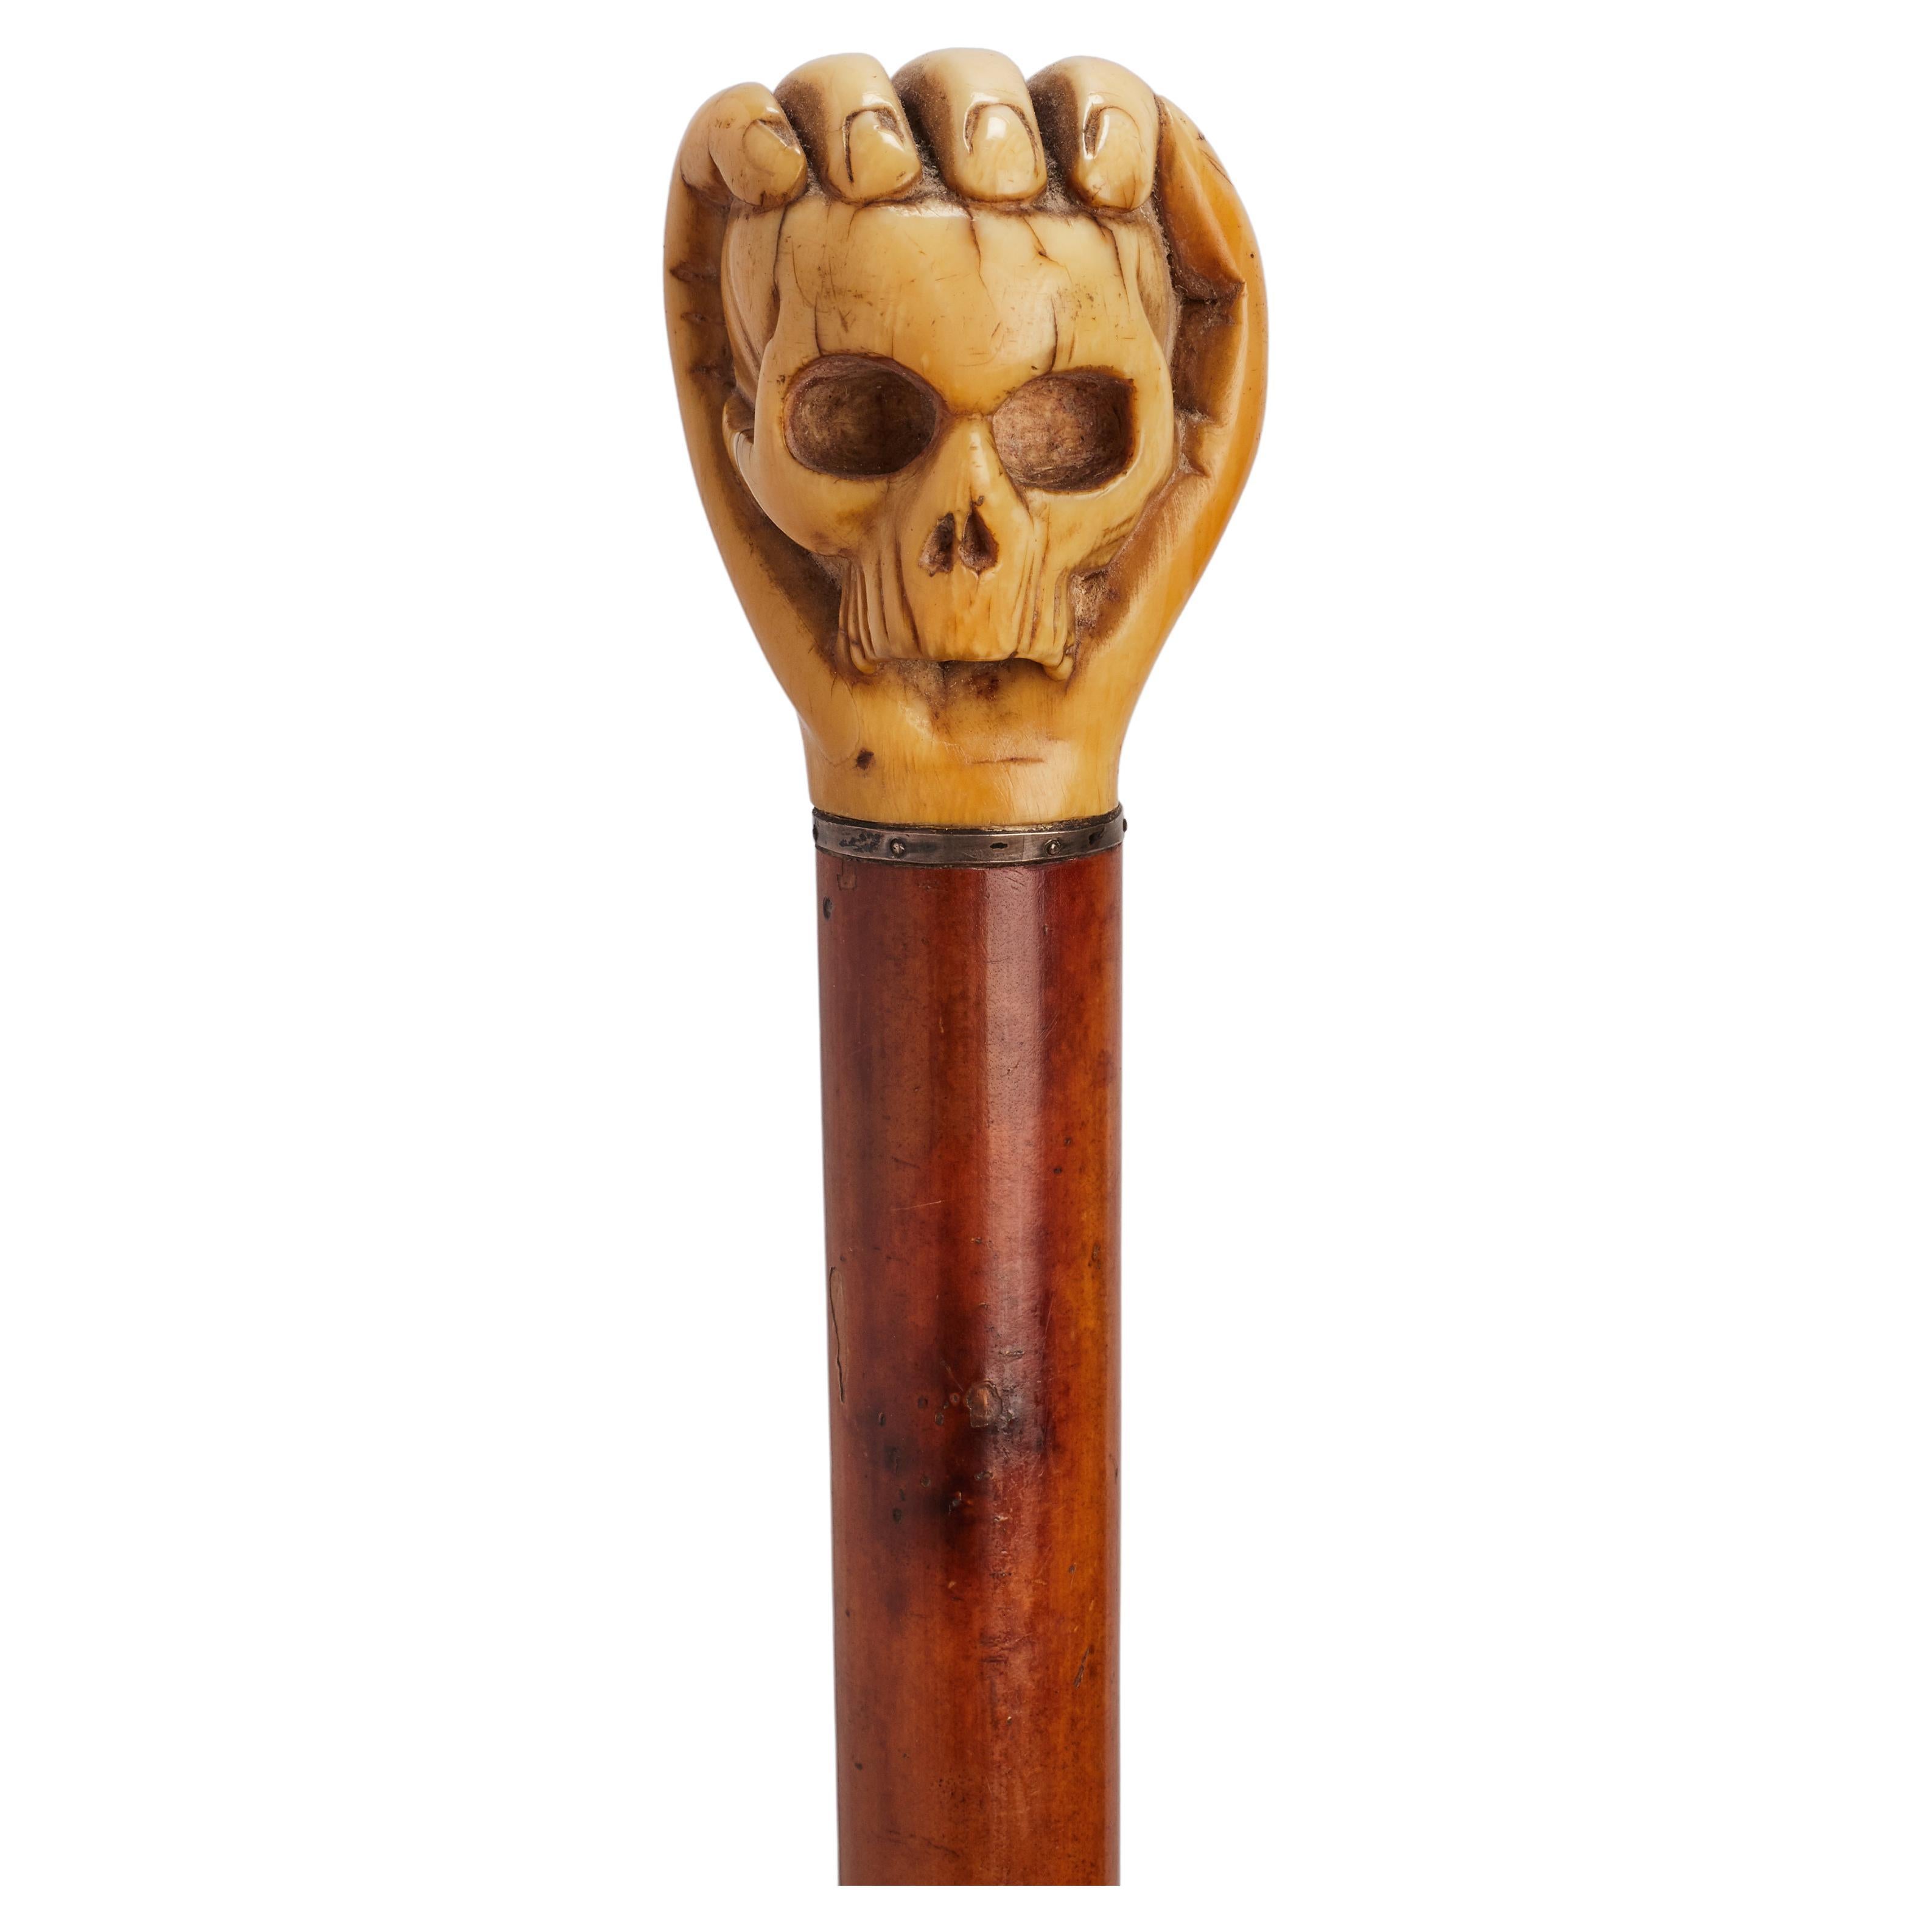 Memento mori ivory handle walking stick, Germany 1860. 